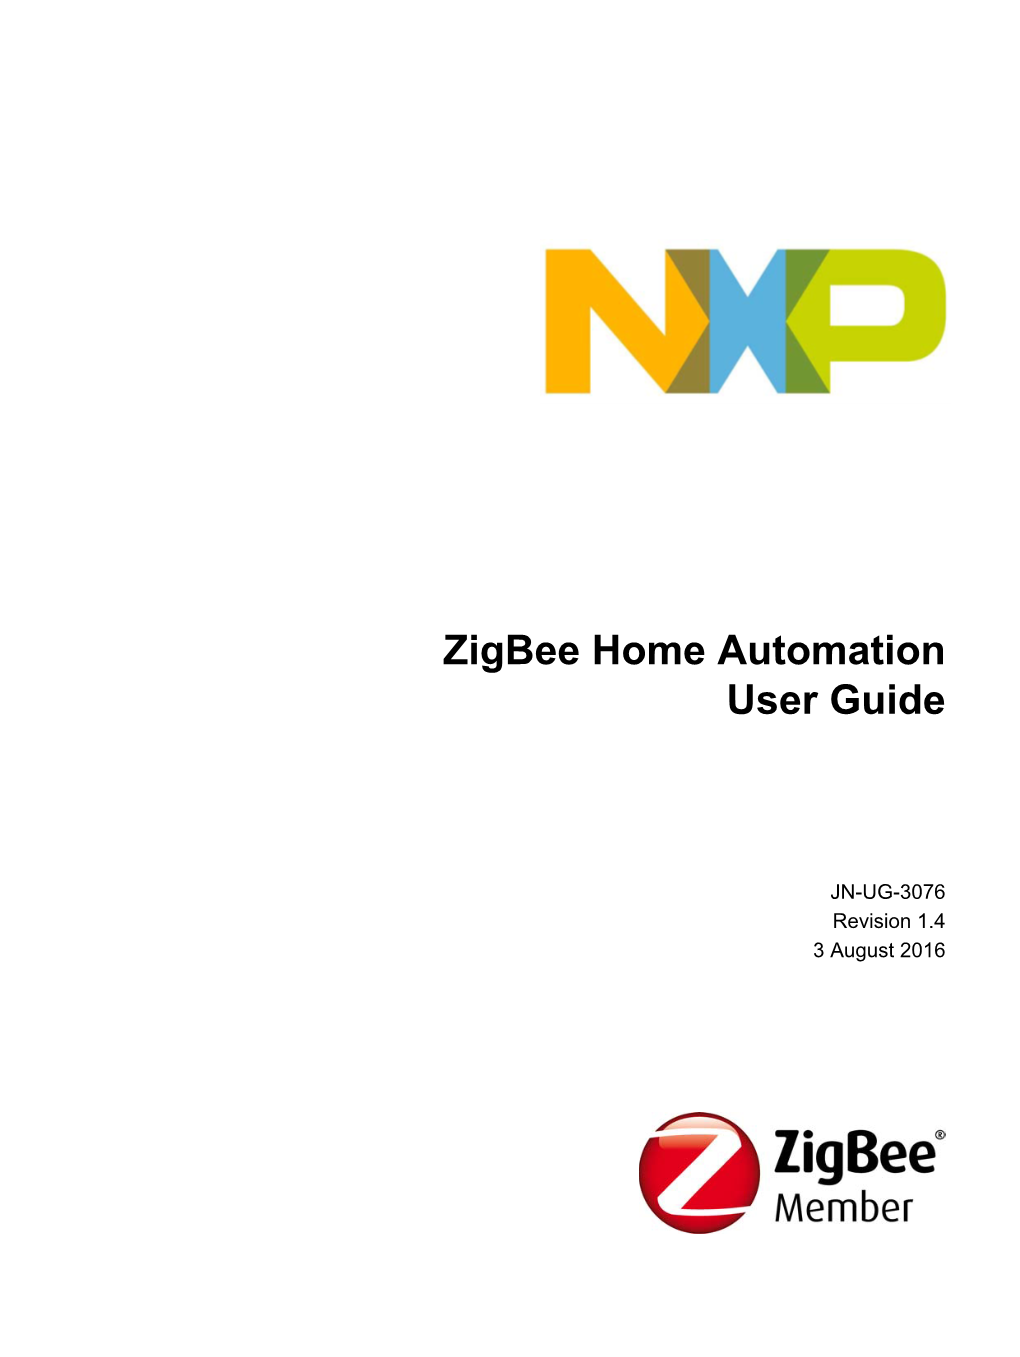 Zigbee Home Automation User Guide